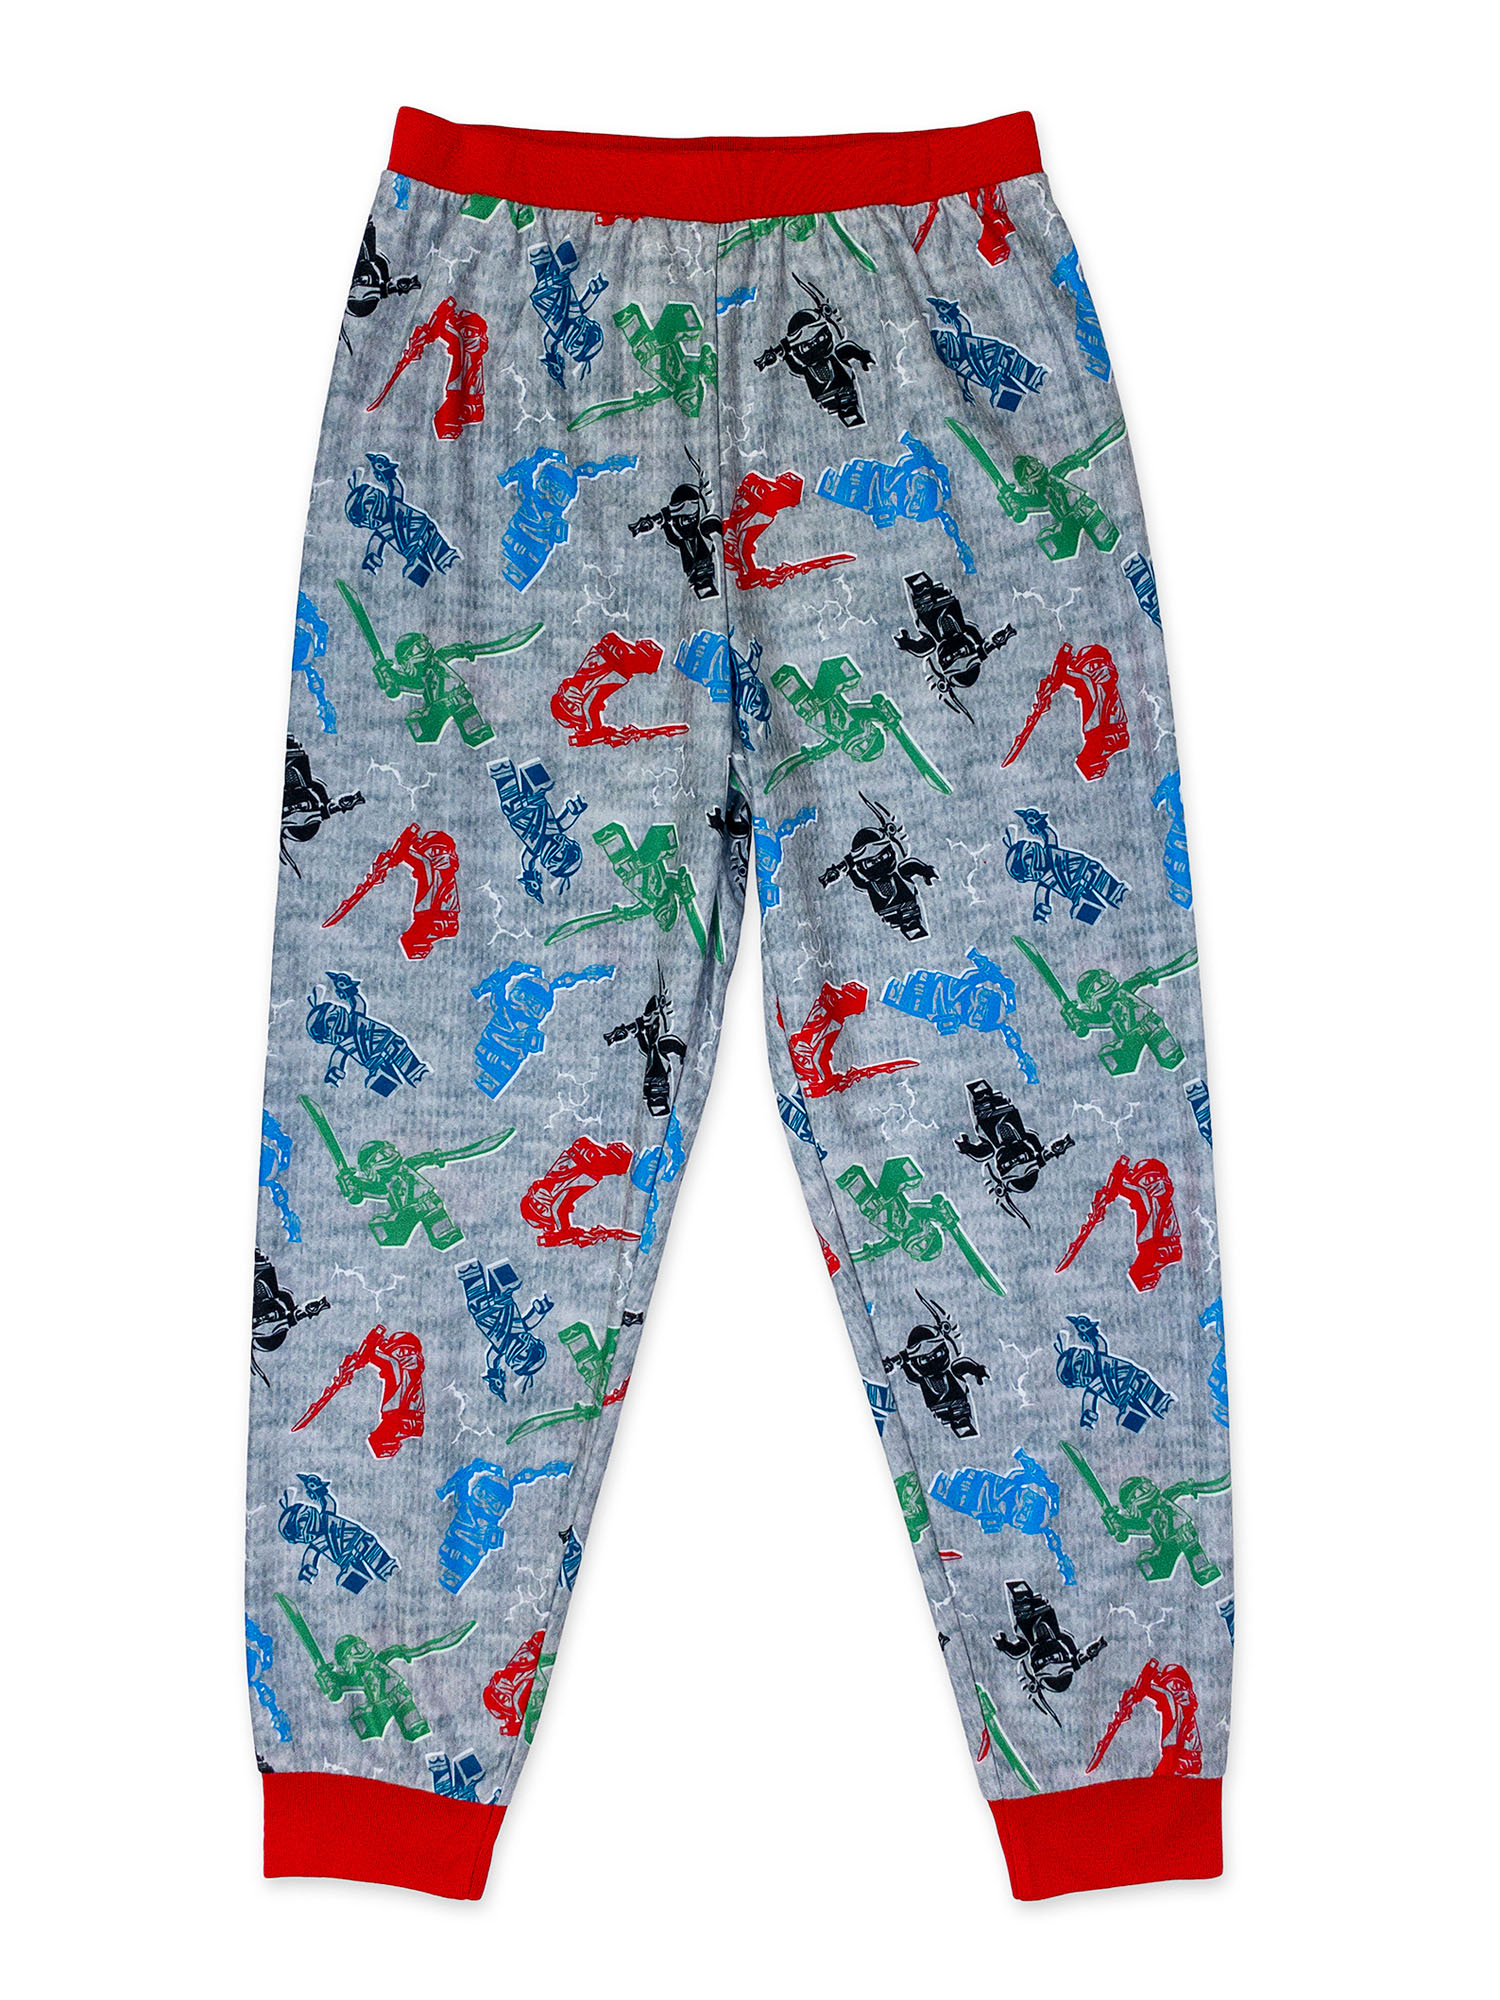 Lego Ninjago Boys Hooded Long Sleeve Top and Long Pants, 2-Piece Pajama Sleep Set, Sizes 4-12 - image 2 of 5